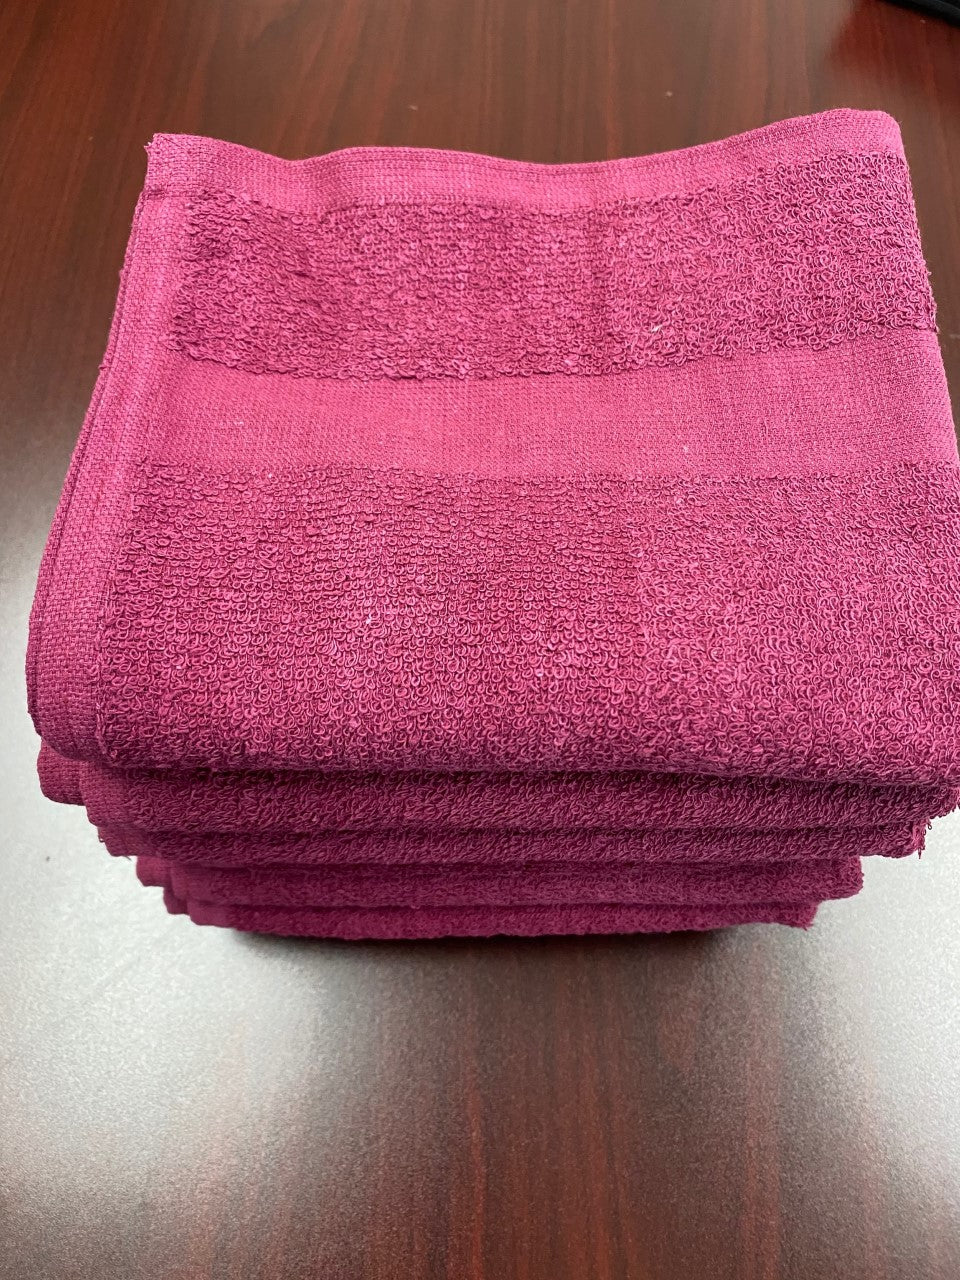 16x28 Bleach Proof Salon Towels, 3 lb/dz - Hunter Green